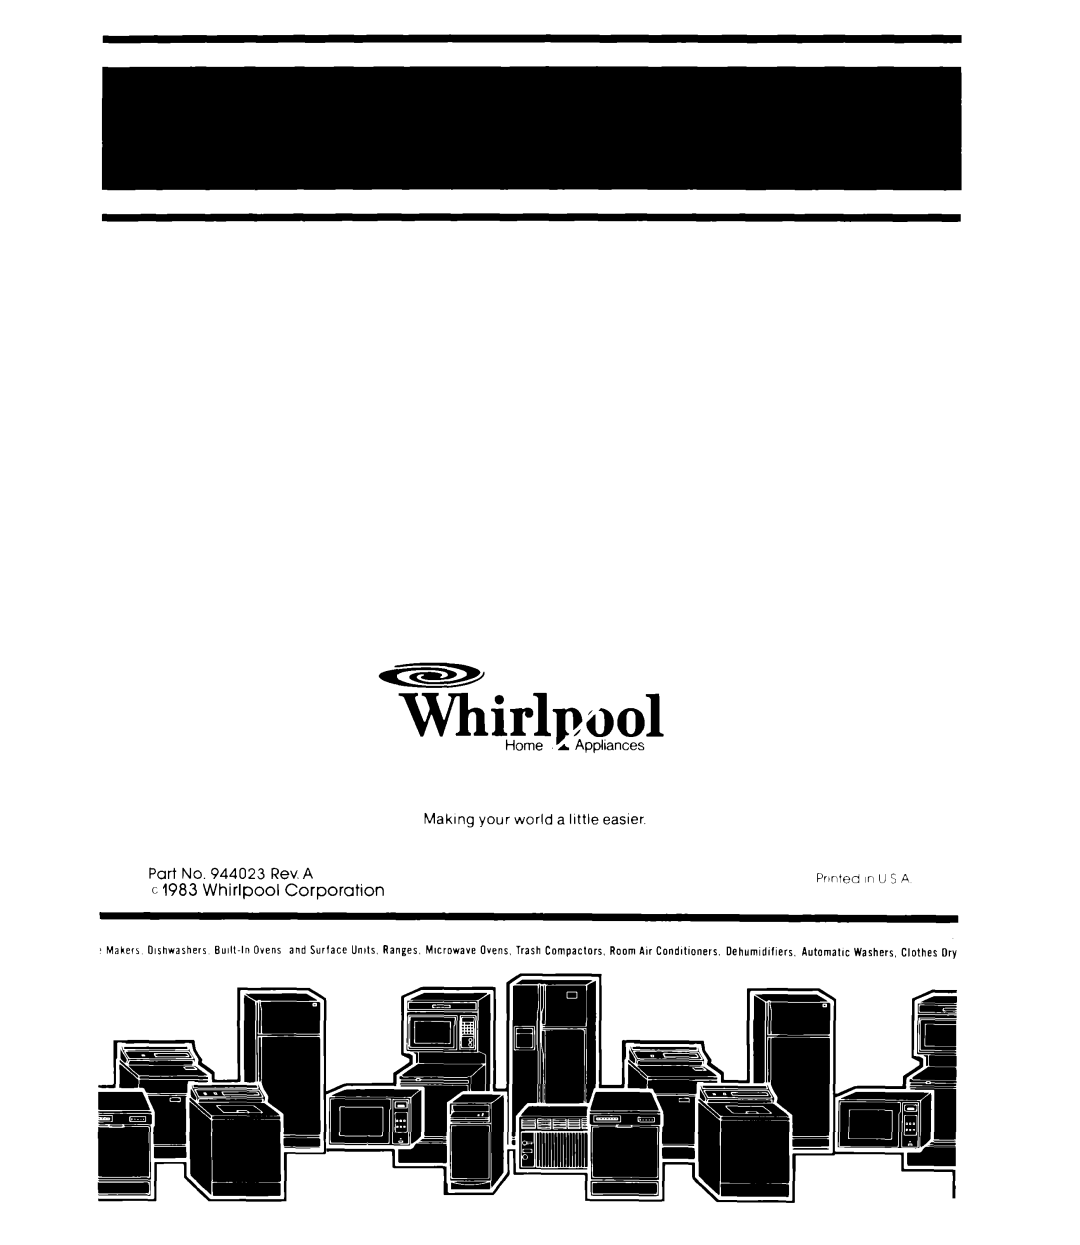 Whirlpool EB19MK manual c 1983 Whirlpool Corporation, hrlpool 